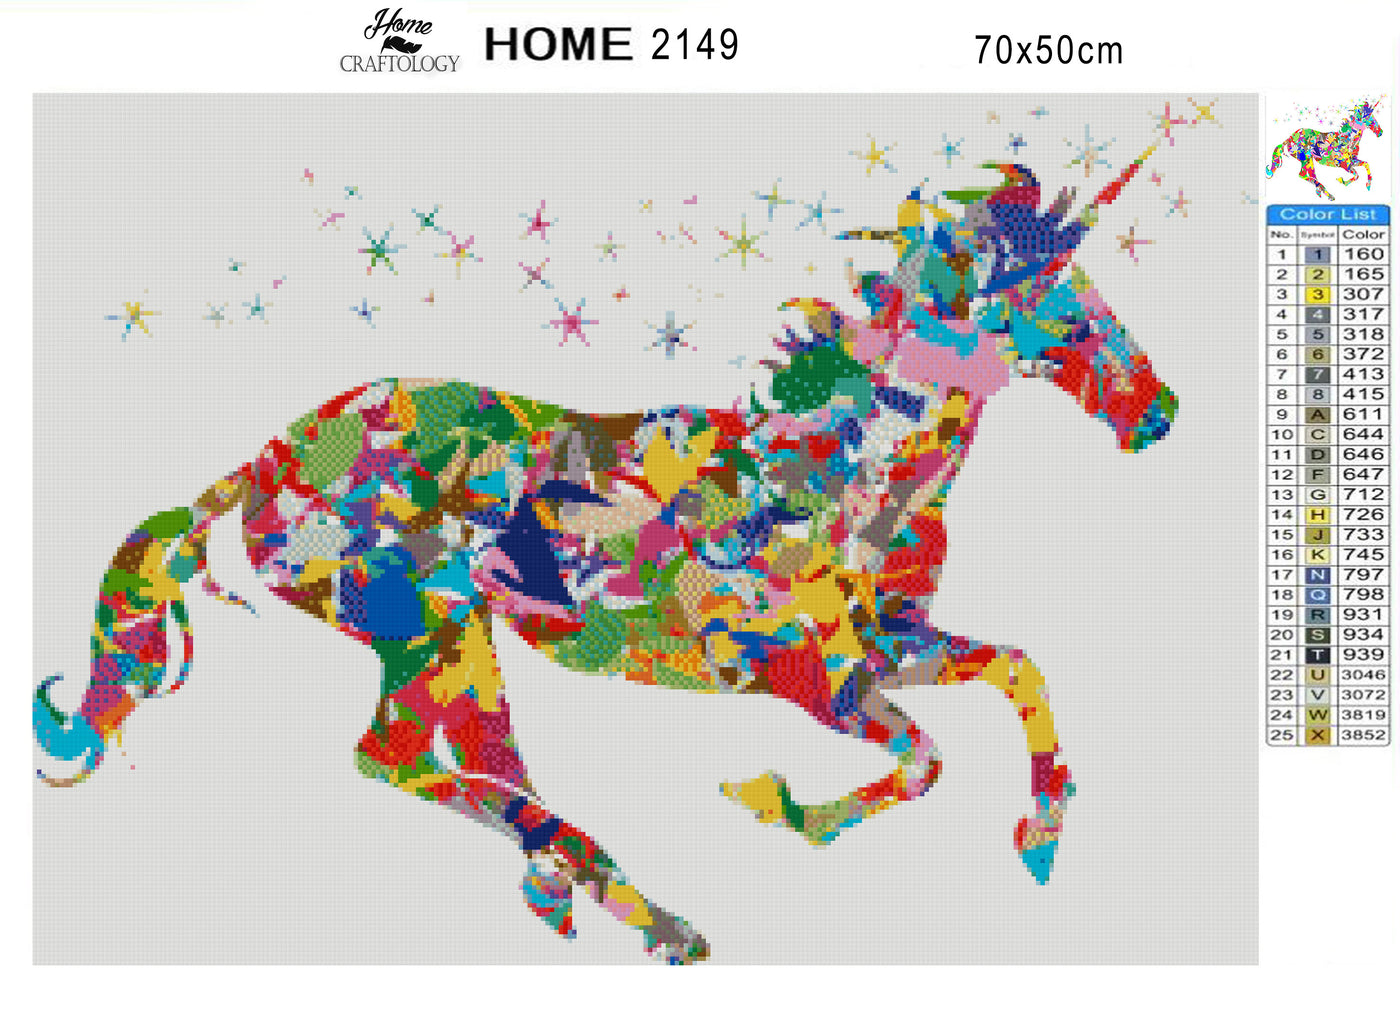 Prismatic Horse - Premium Diamond Painting Kit